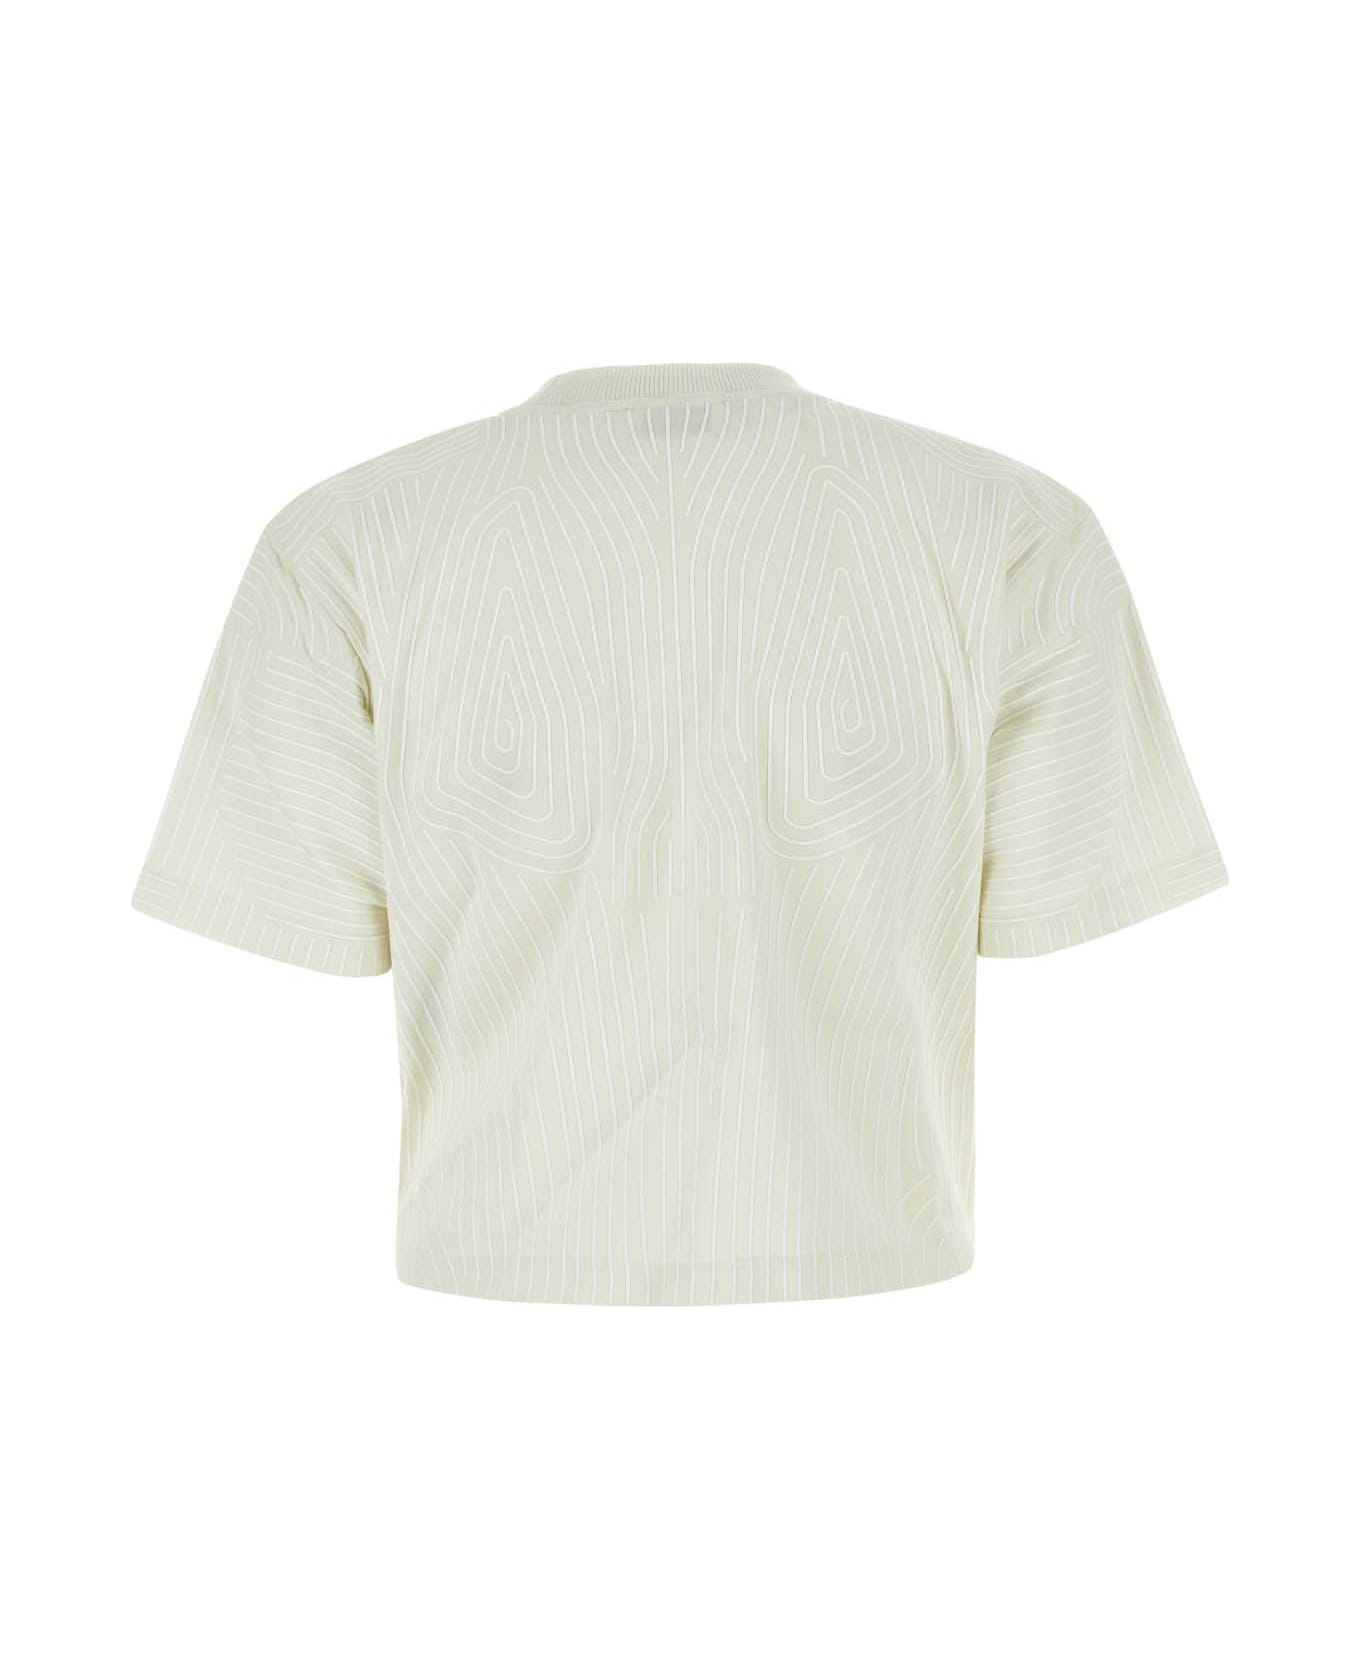 Off-White Oversize T-shirt - WHTWHT Tシャツ